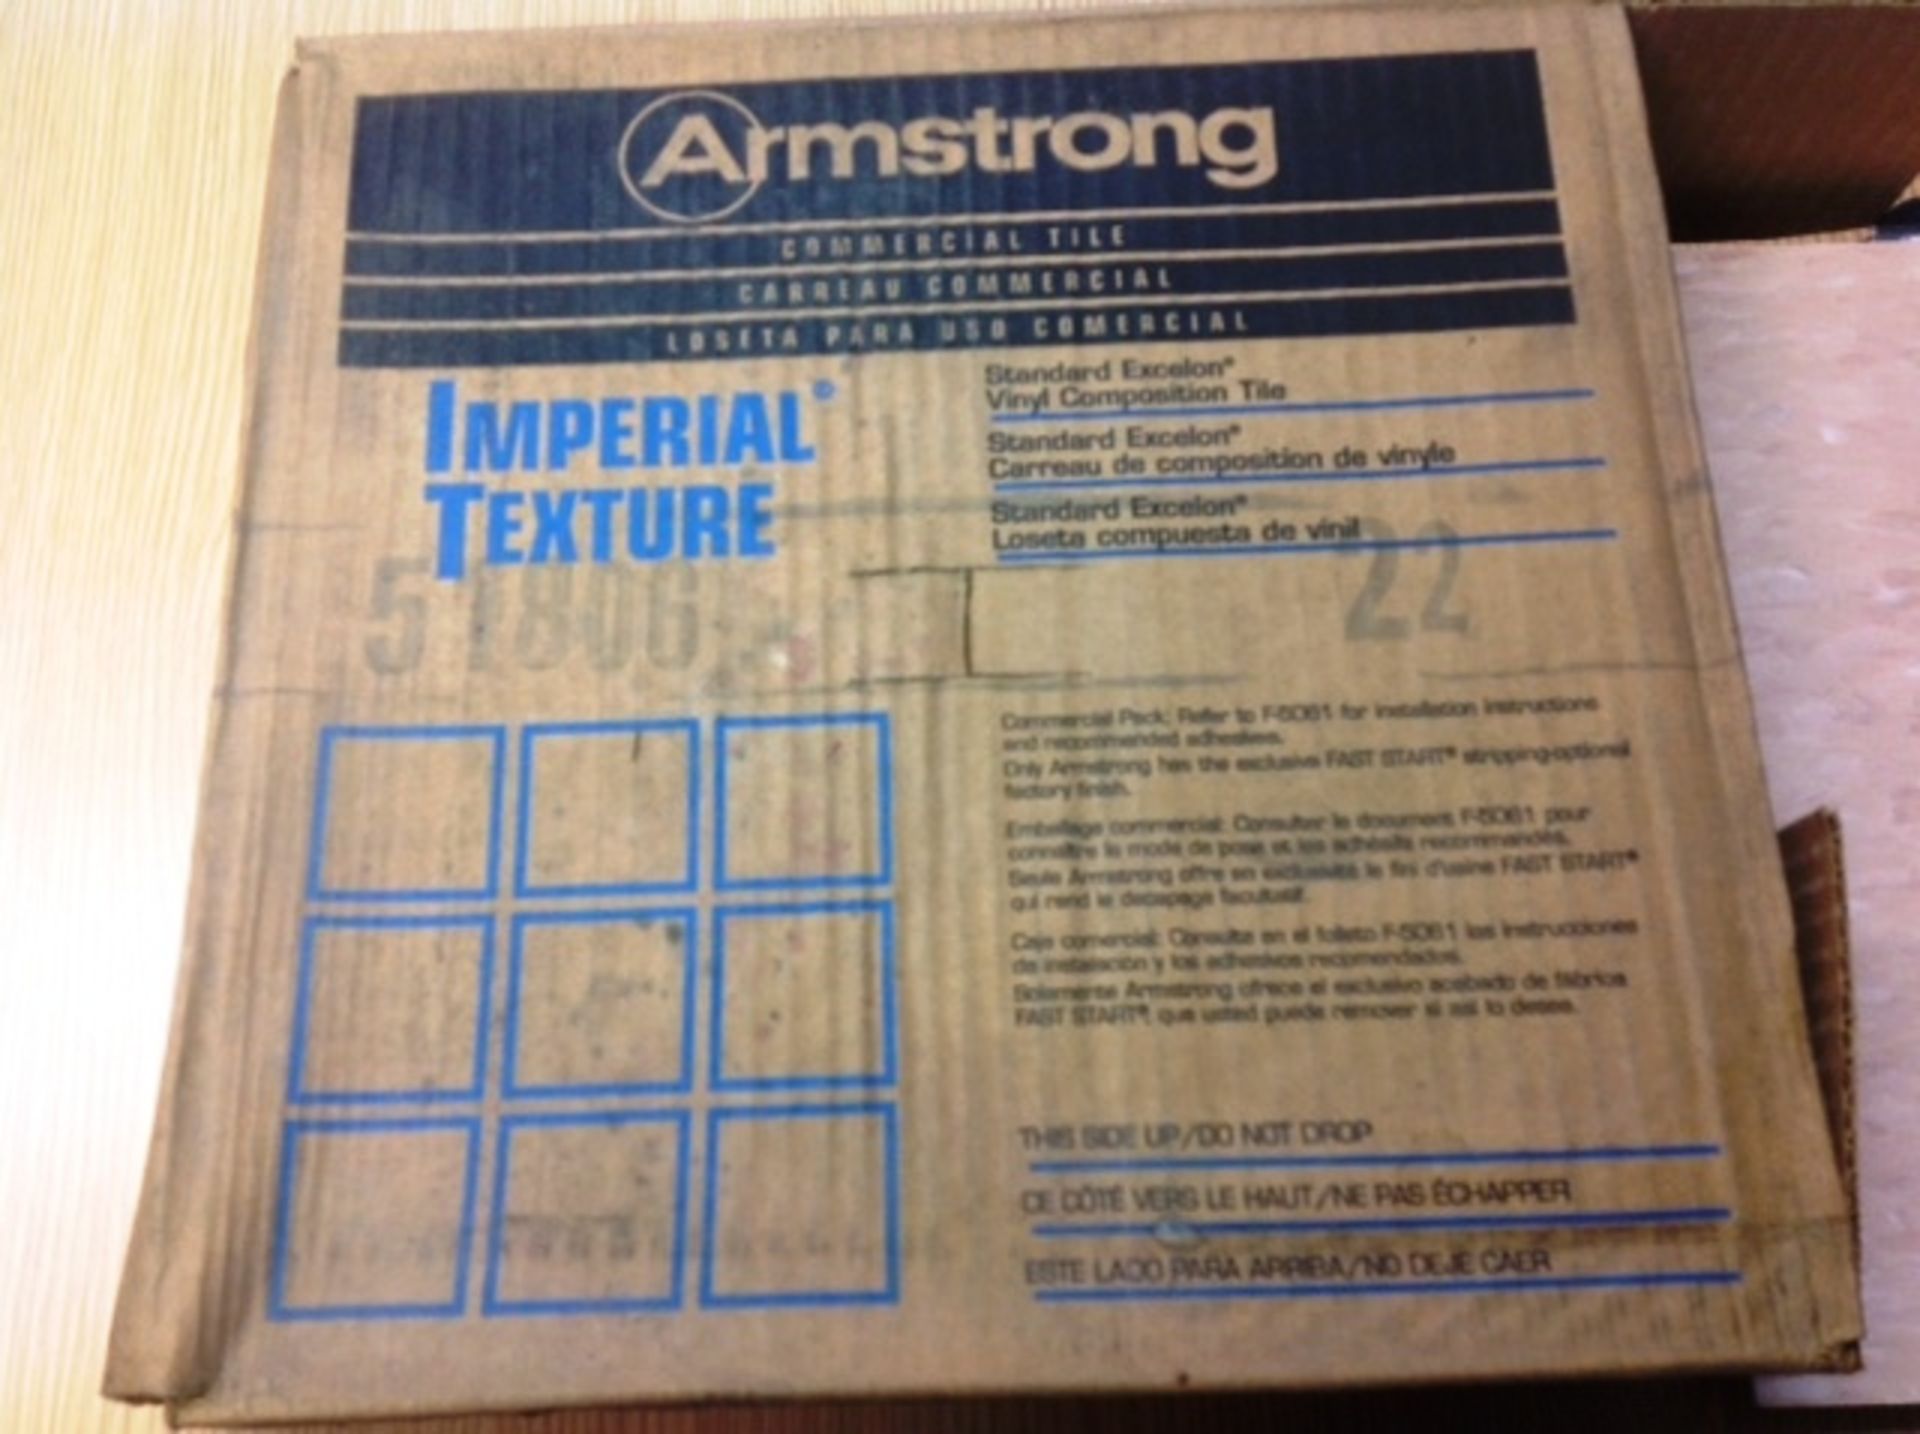 10 x Boxes of Armstrong vinyl floor tiles - 45 tiles per box = 45 sq ft